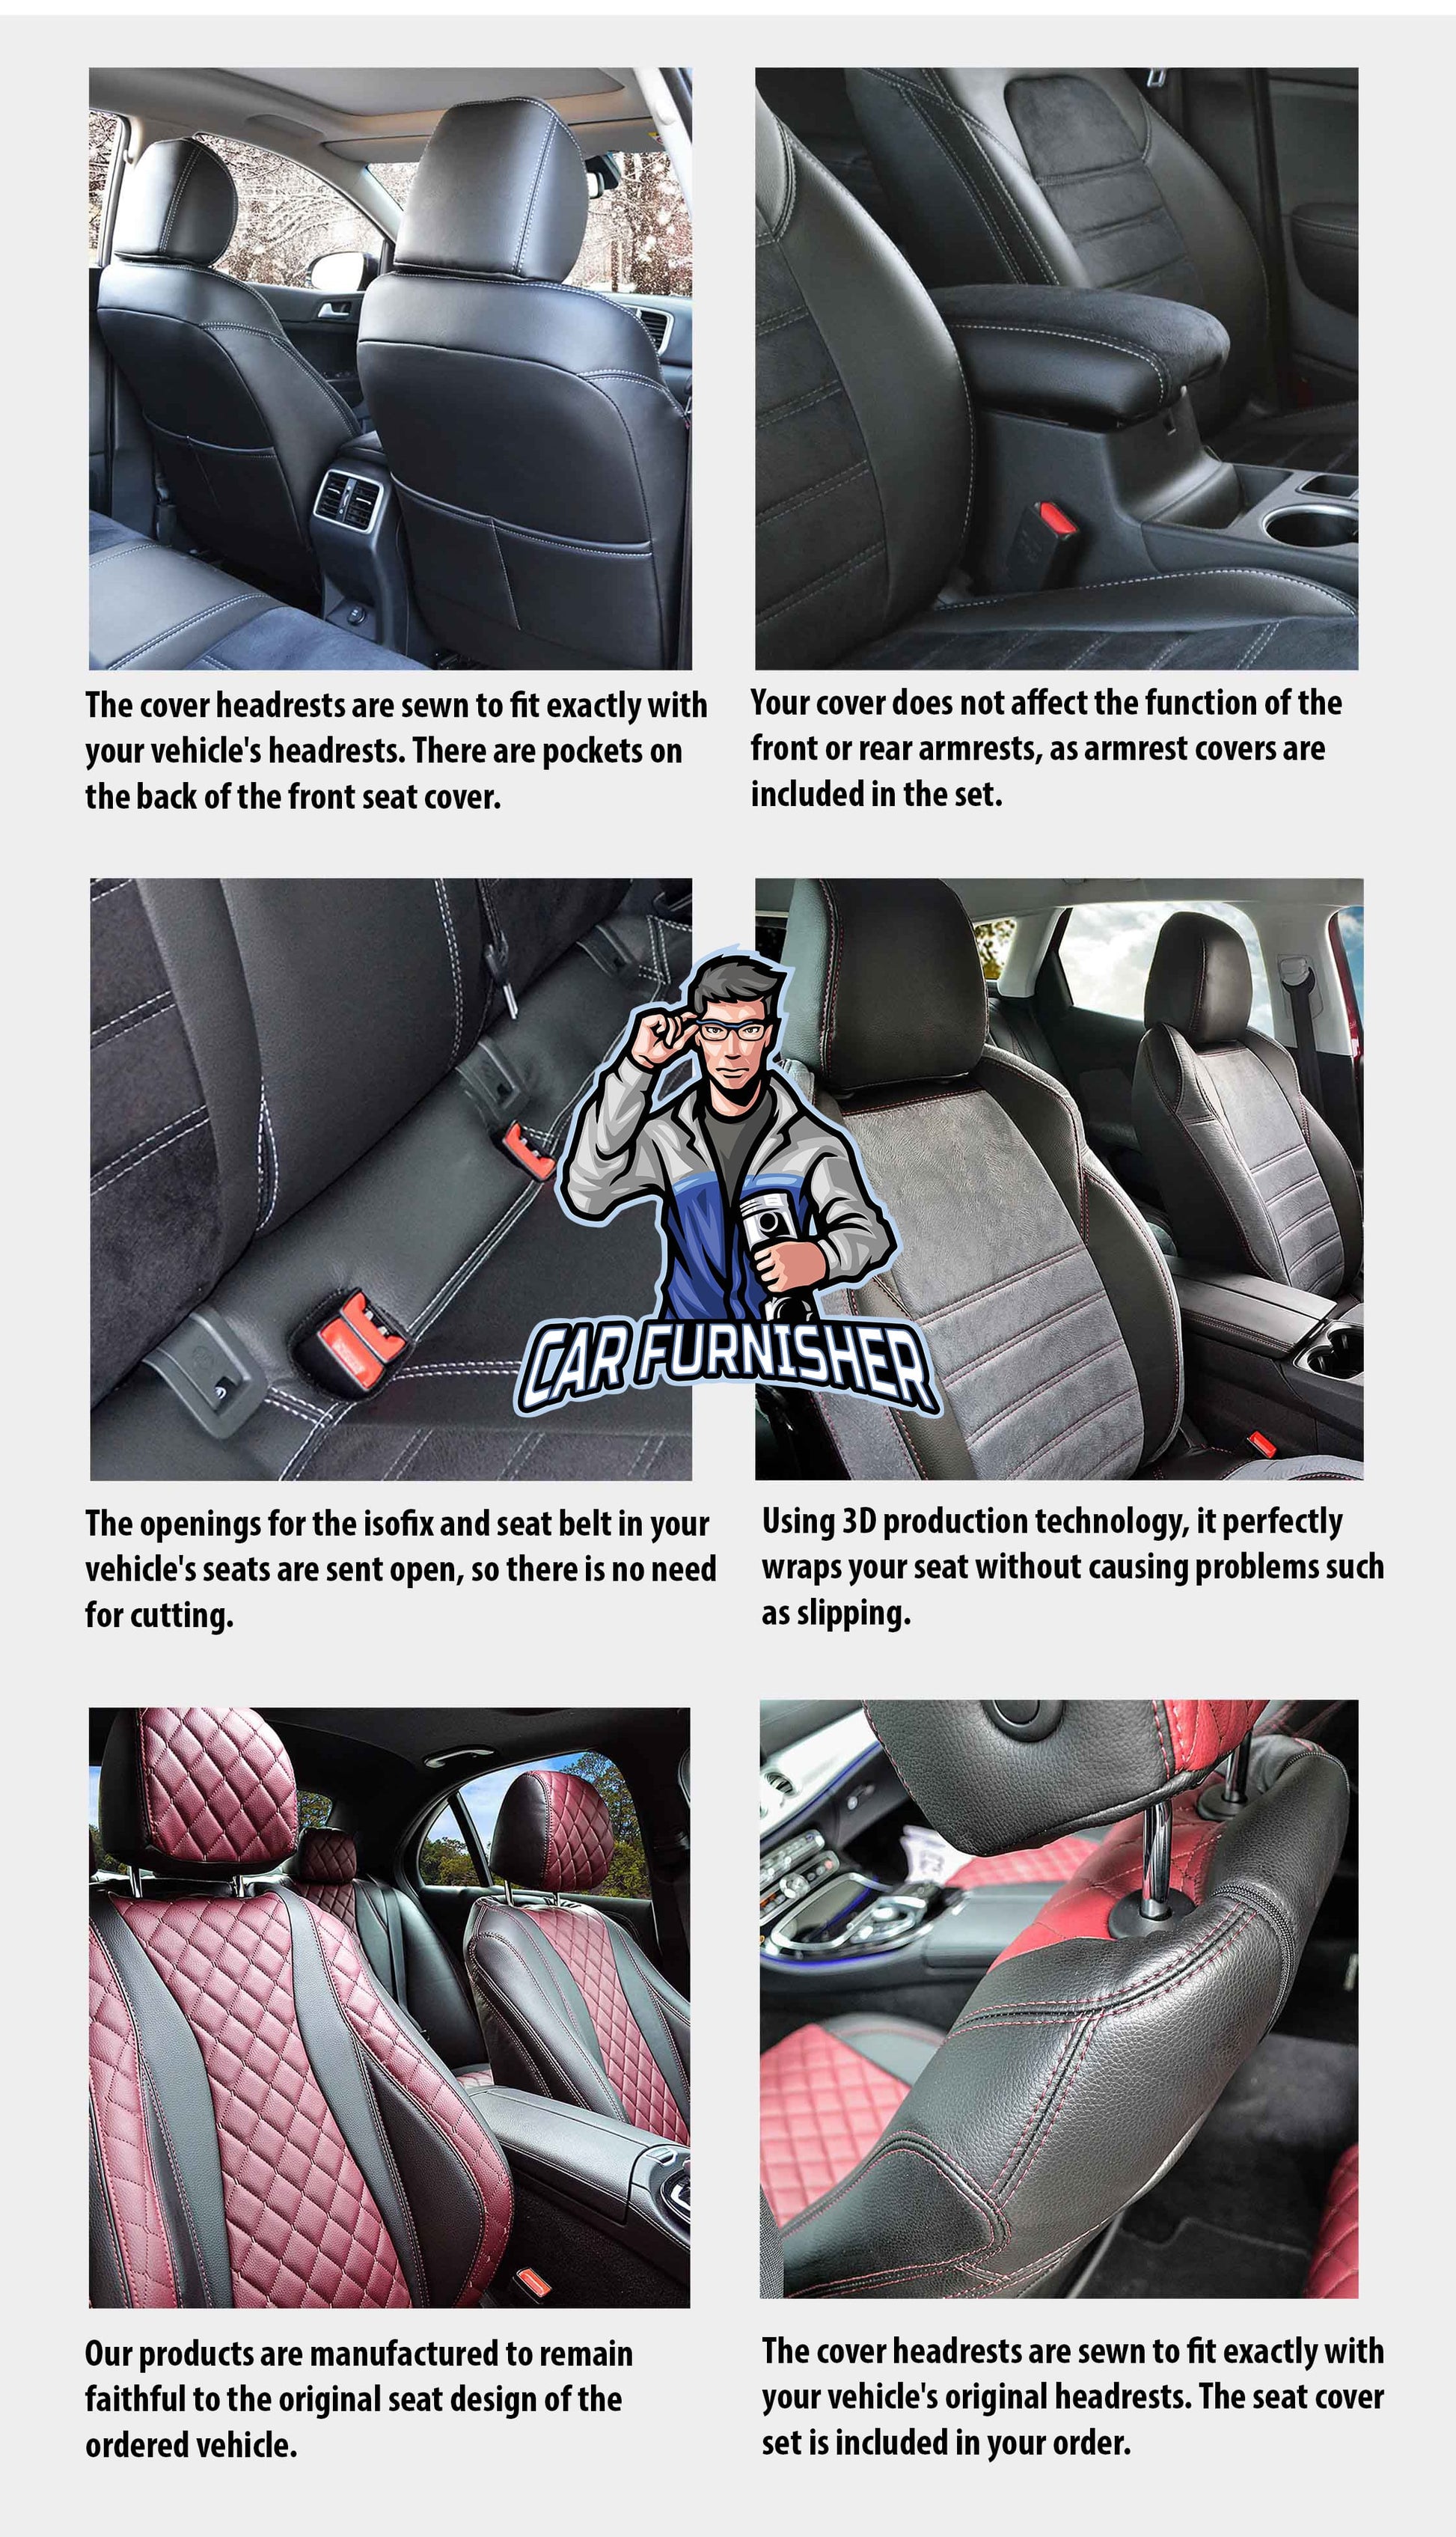 Kia Bongo Seat Covers Paris Leather & Jacquard Design Beige Leather & Jacquard Fabric